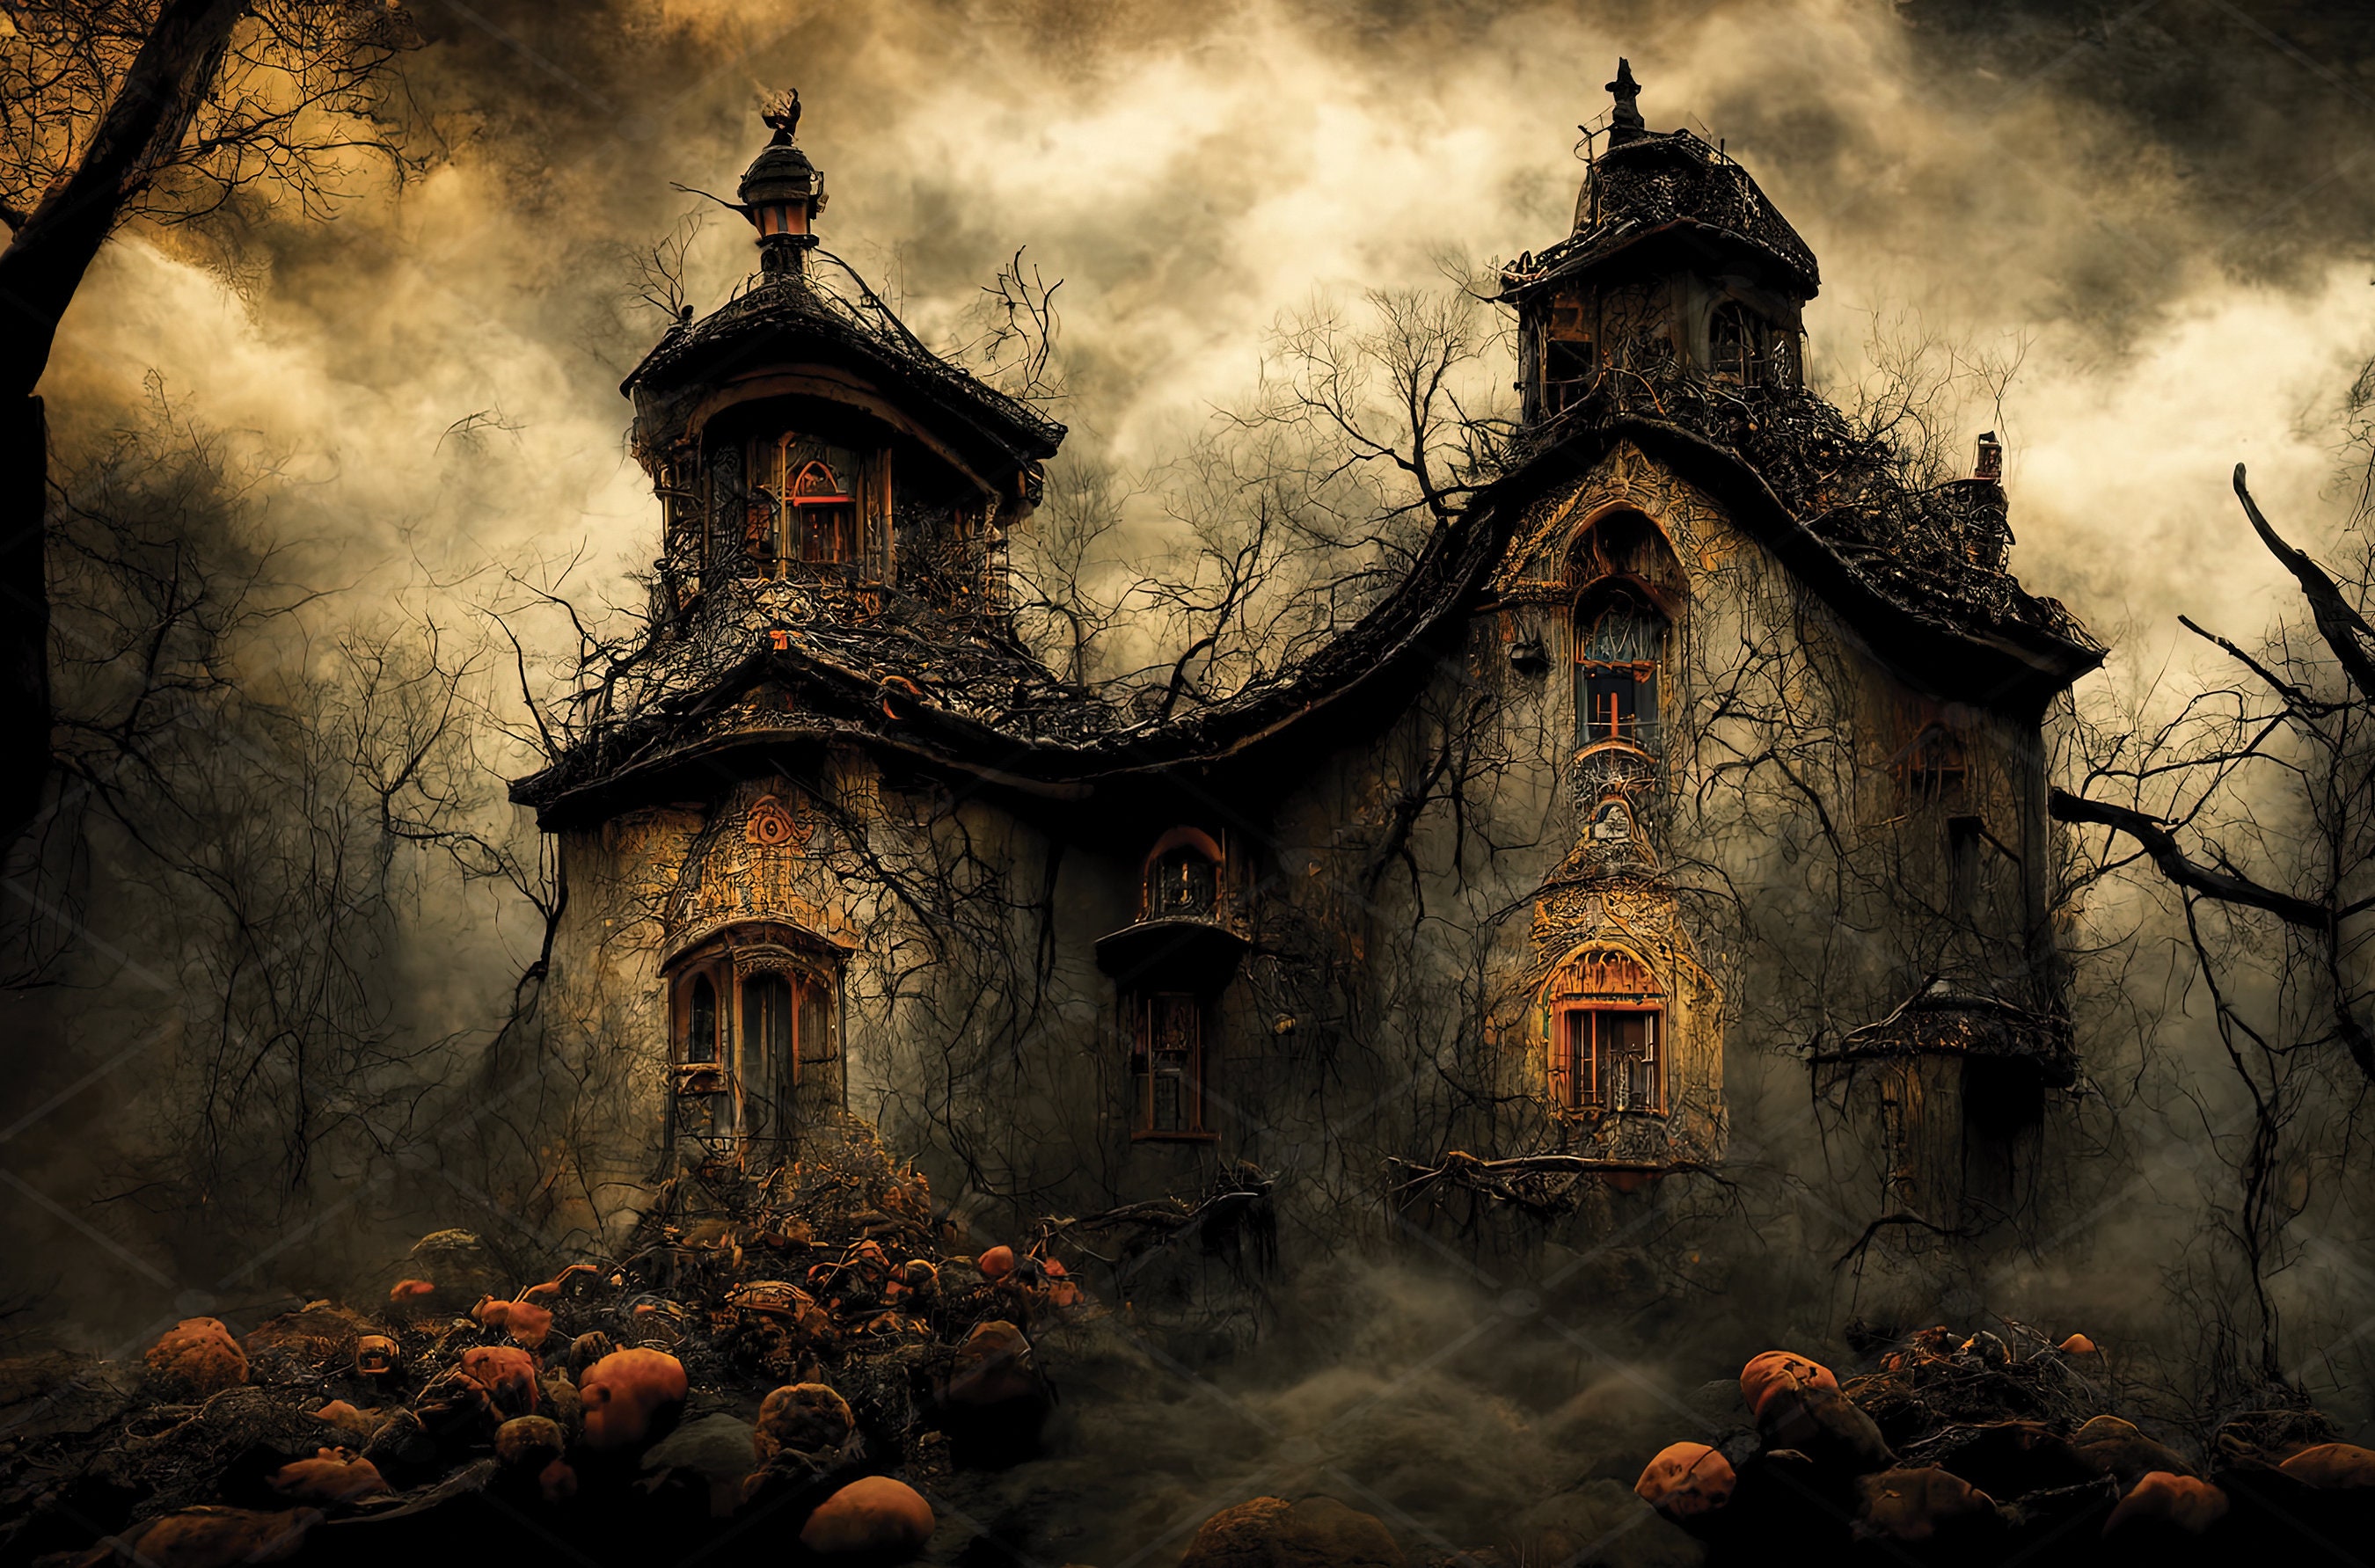 Dark Gothic Fantasy Haunted House Digital Download/art - Etsy